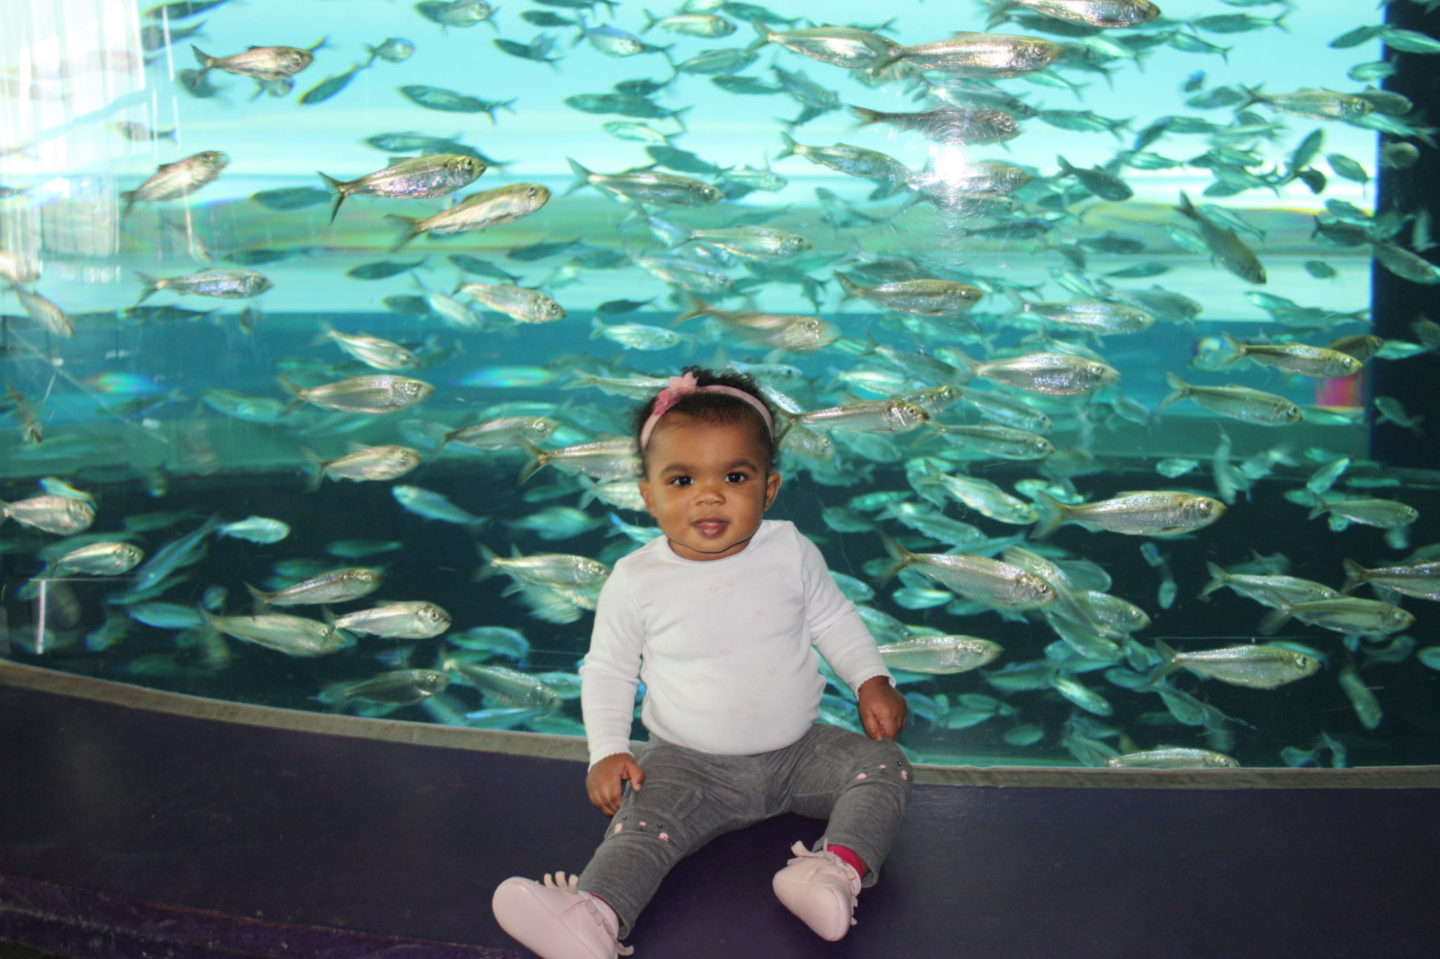 Ripley’s Aquarium with an Infant